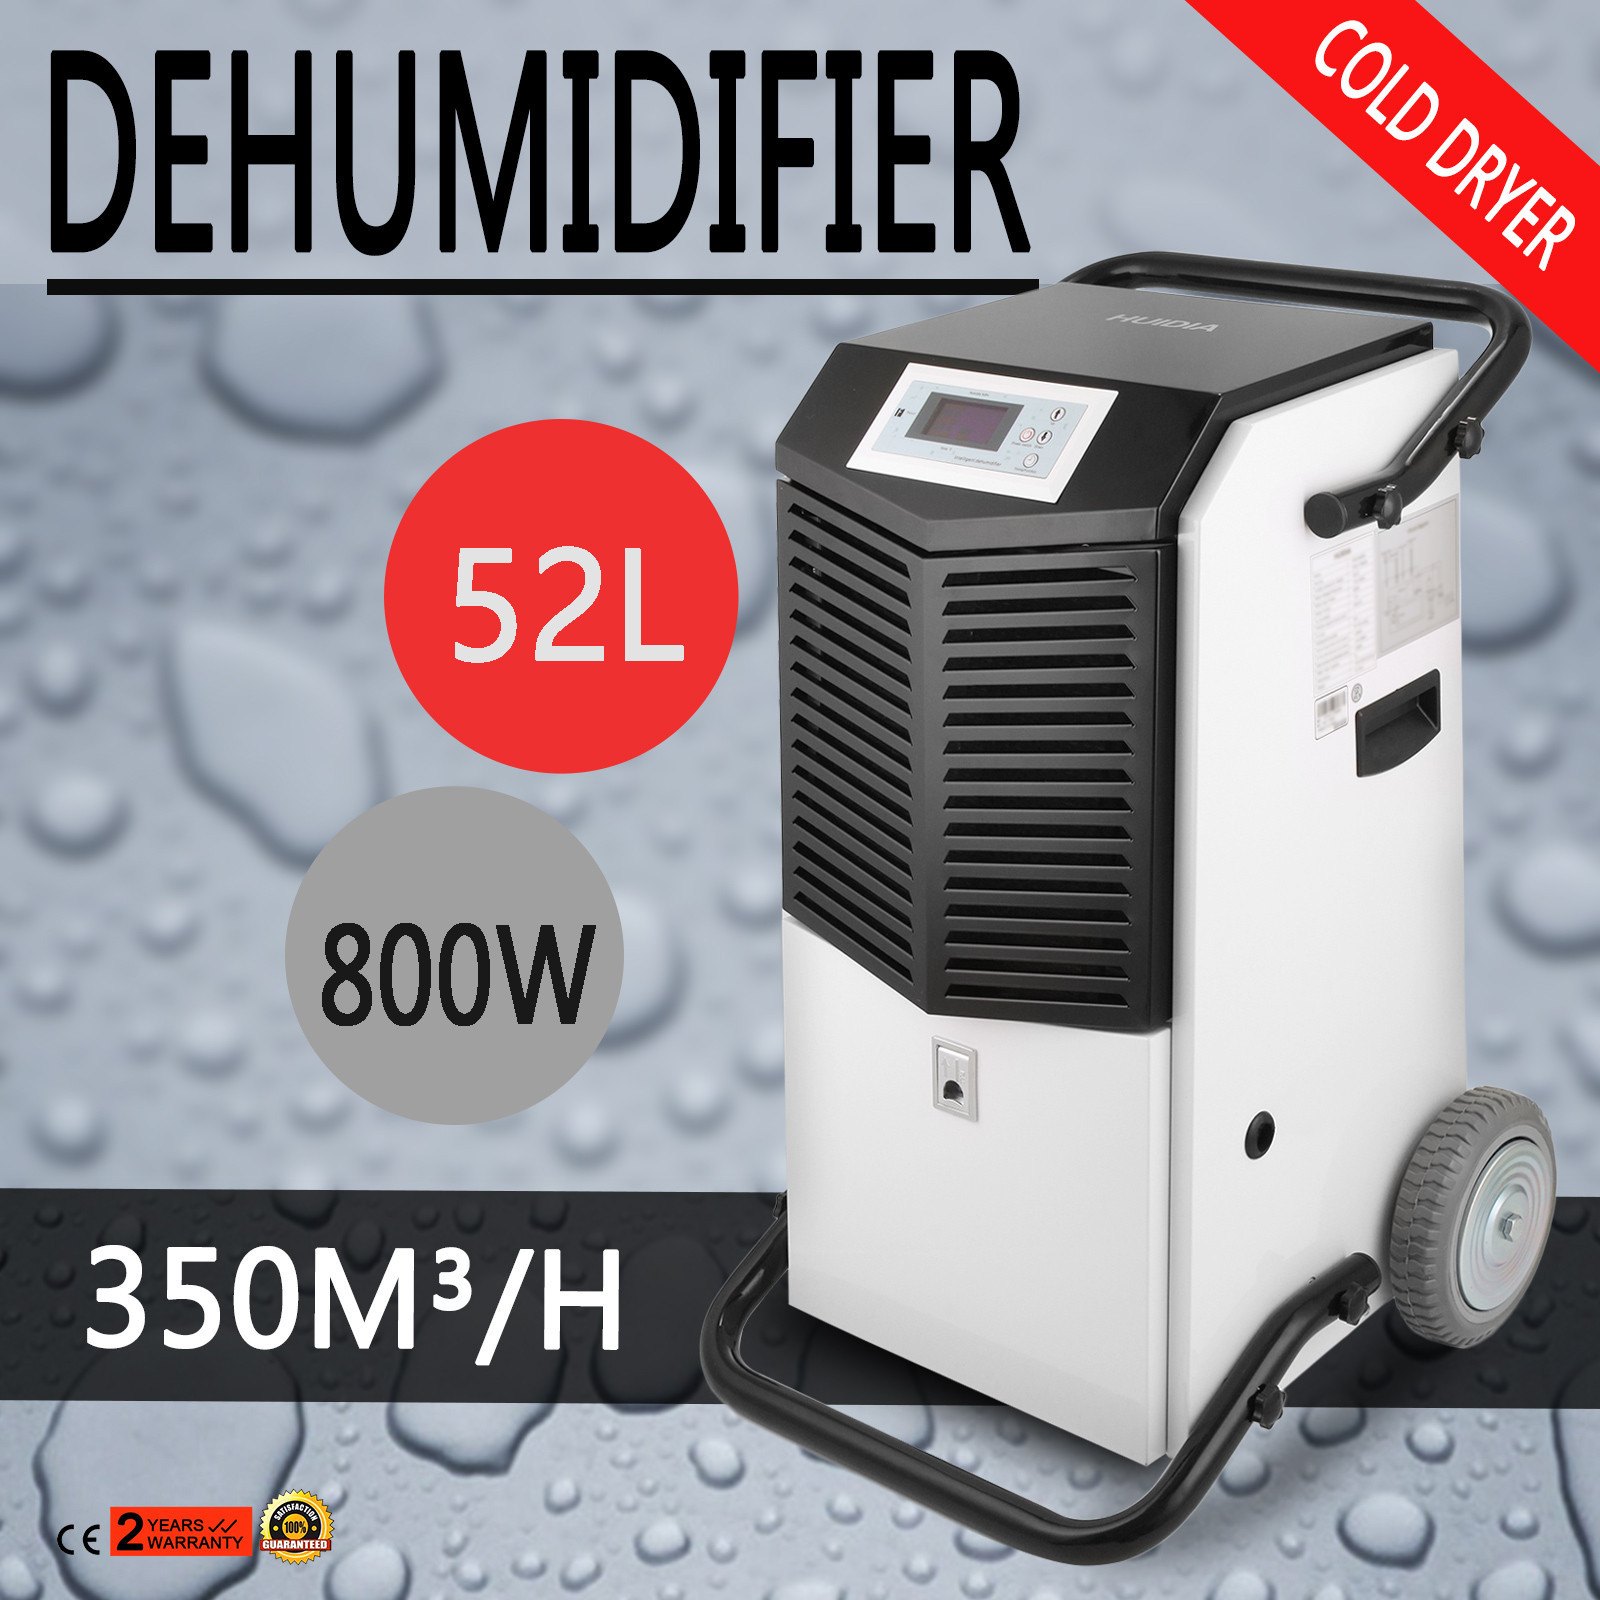 New Premium Quality Dehumidifier Dryer Reduce Air Moisture 52L от Vevor Many GEOs